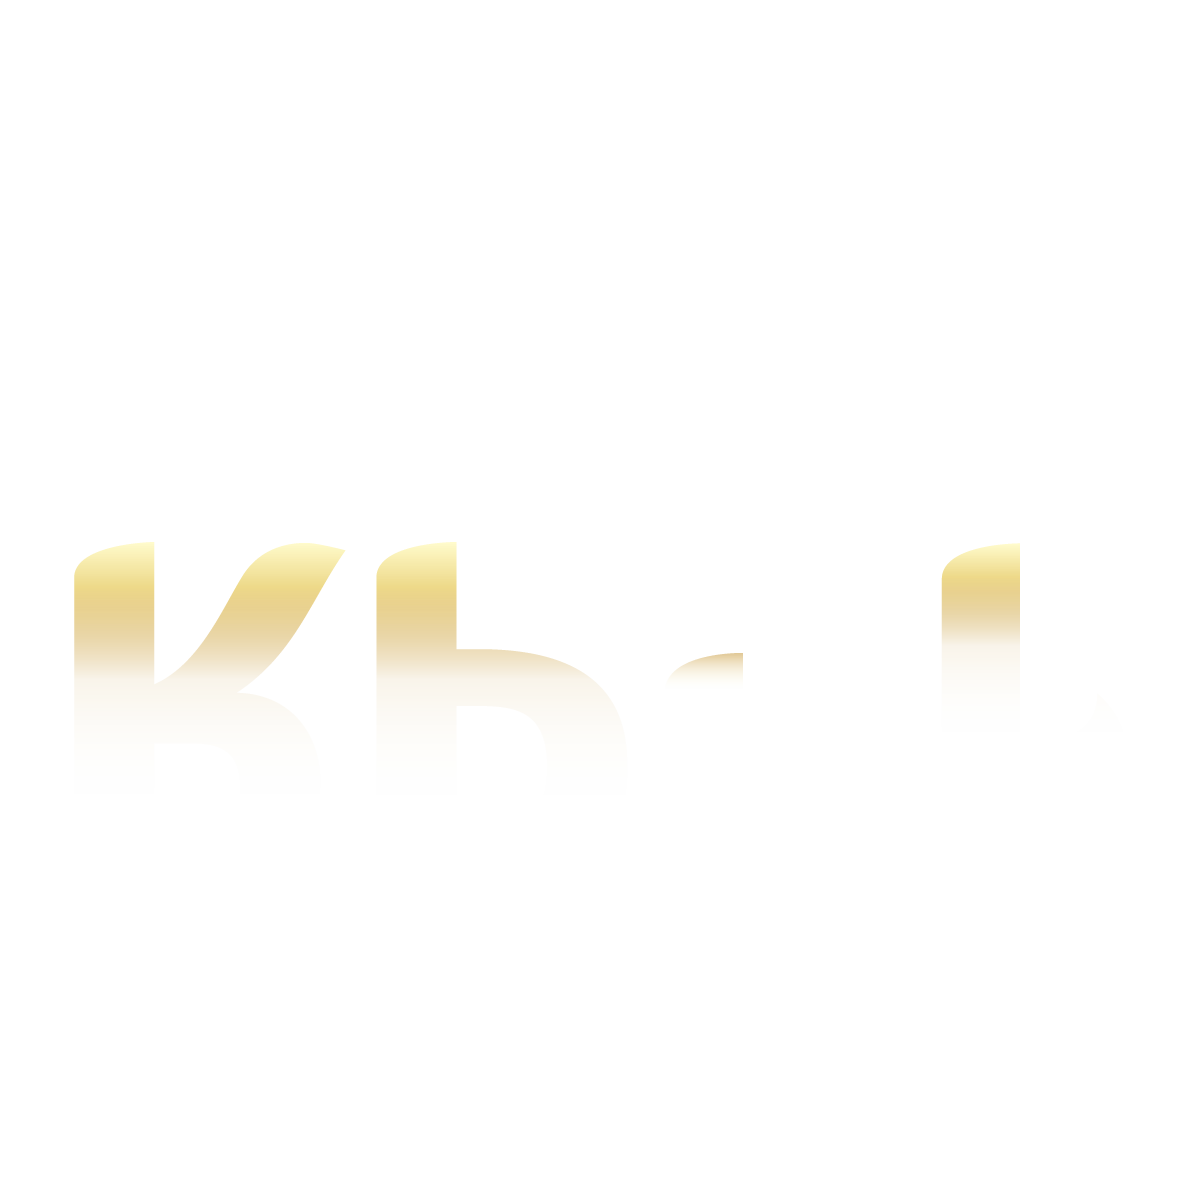 Rich Pedine PR.png